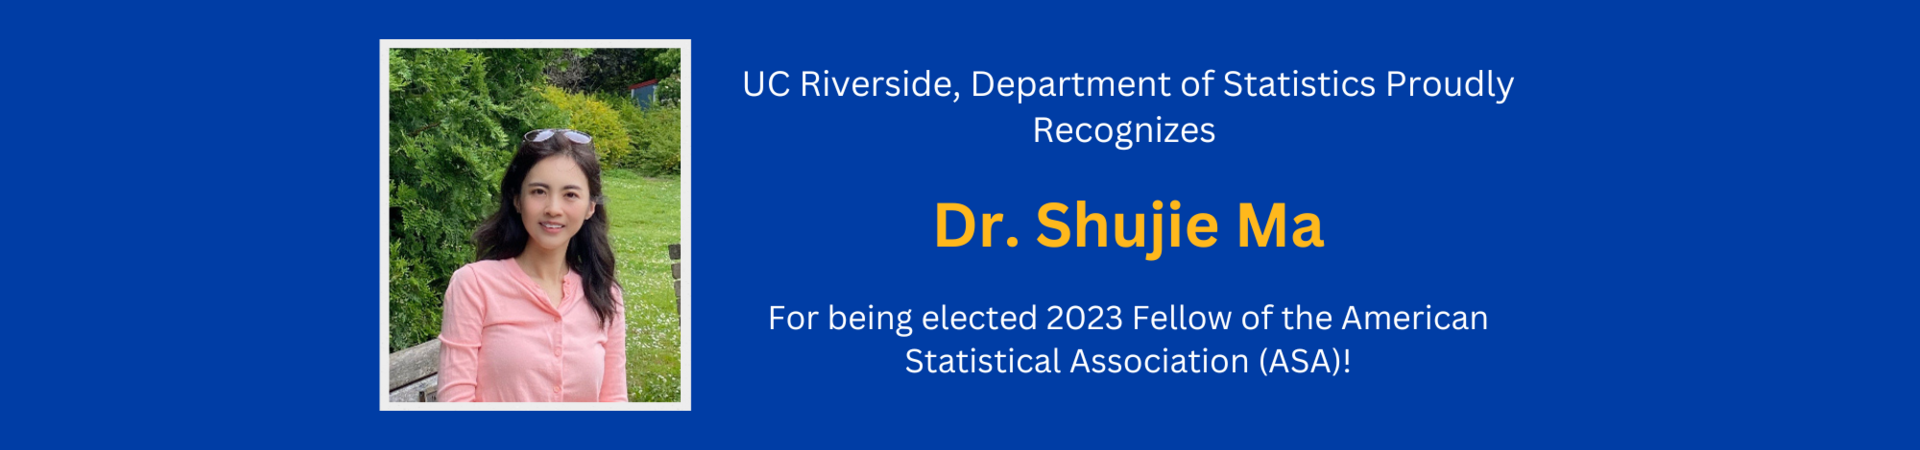 Dr. Shujie Ma elected 2023 Fellow of the ASA